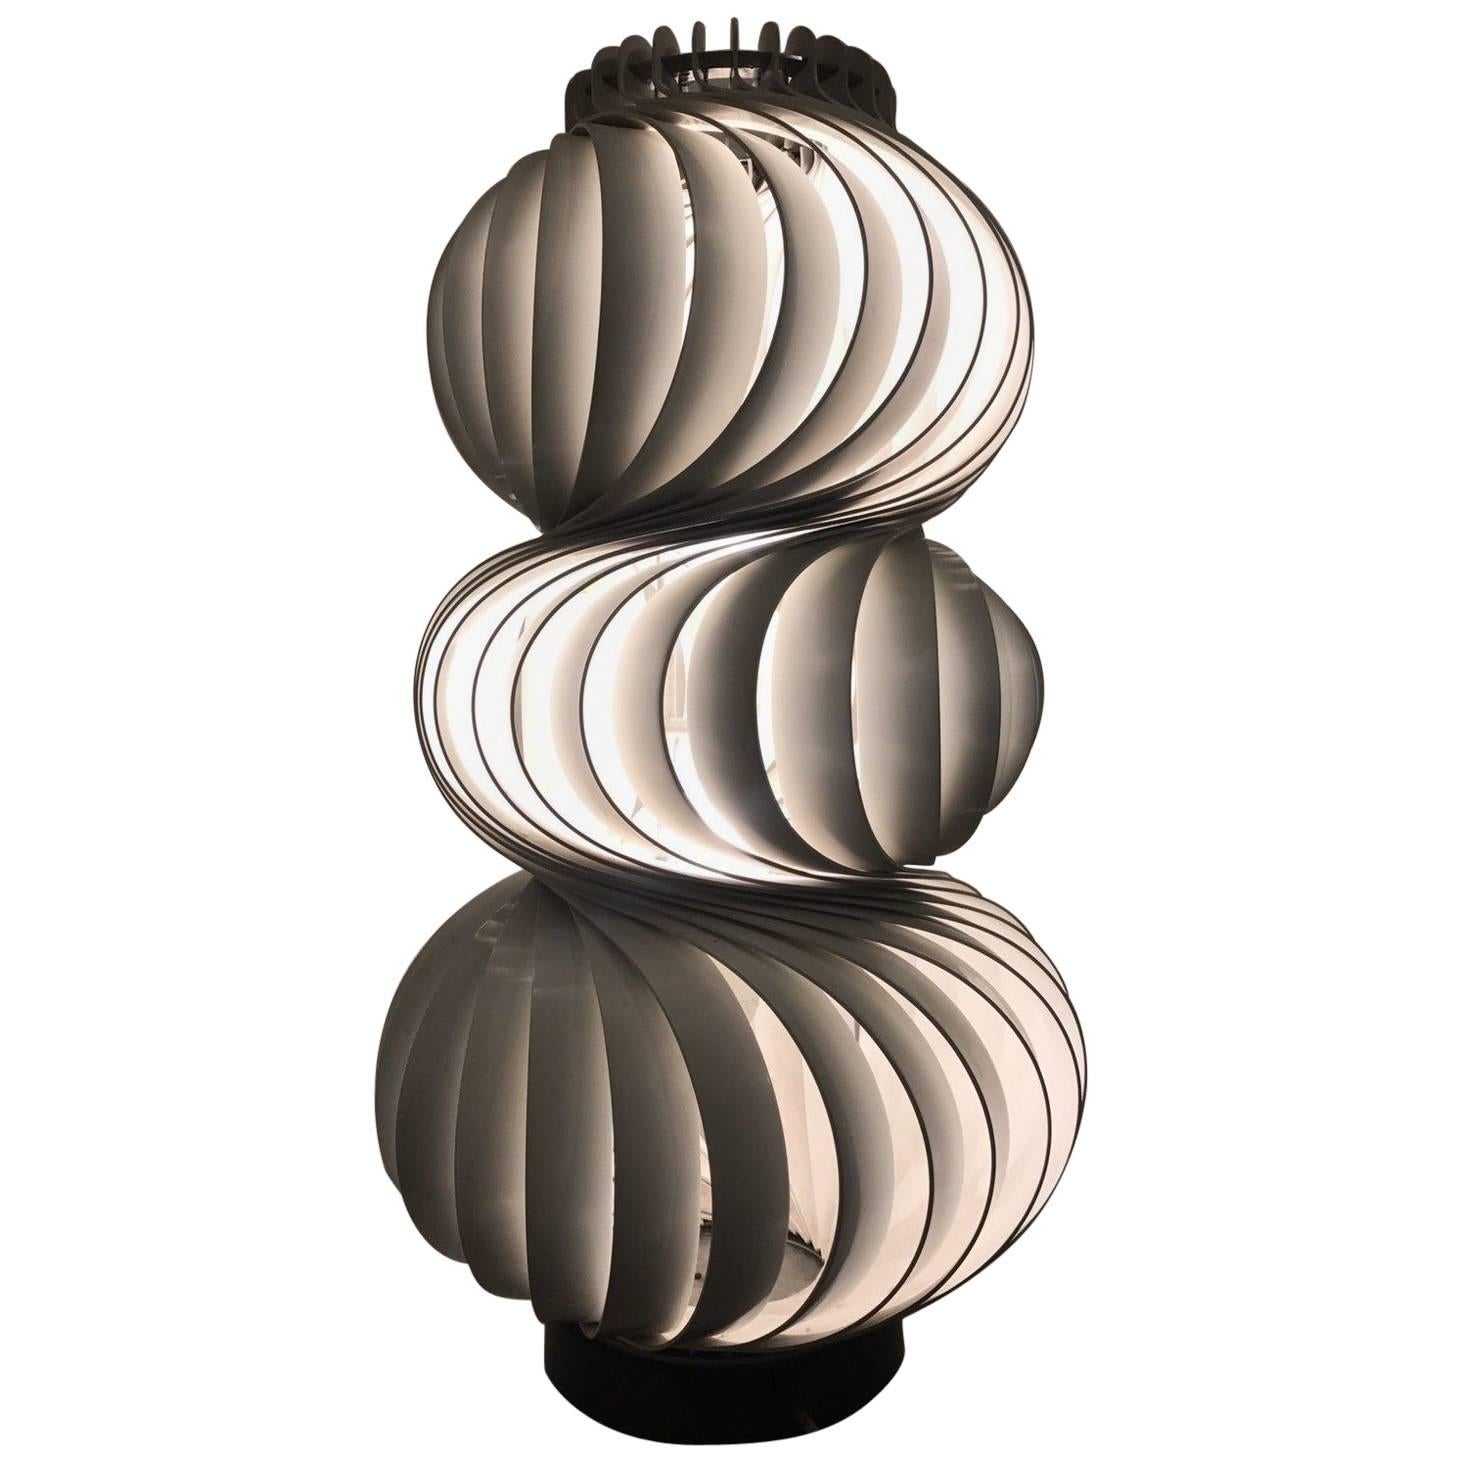 Stunning Olaf von Bohr “Medusa” Table Lamp Valenti For Sale